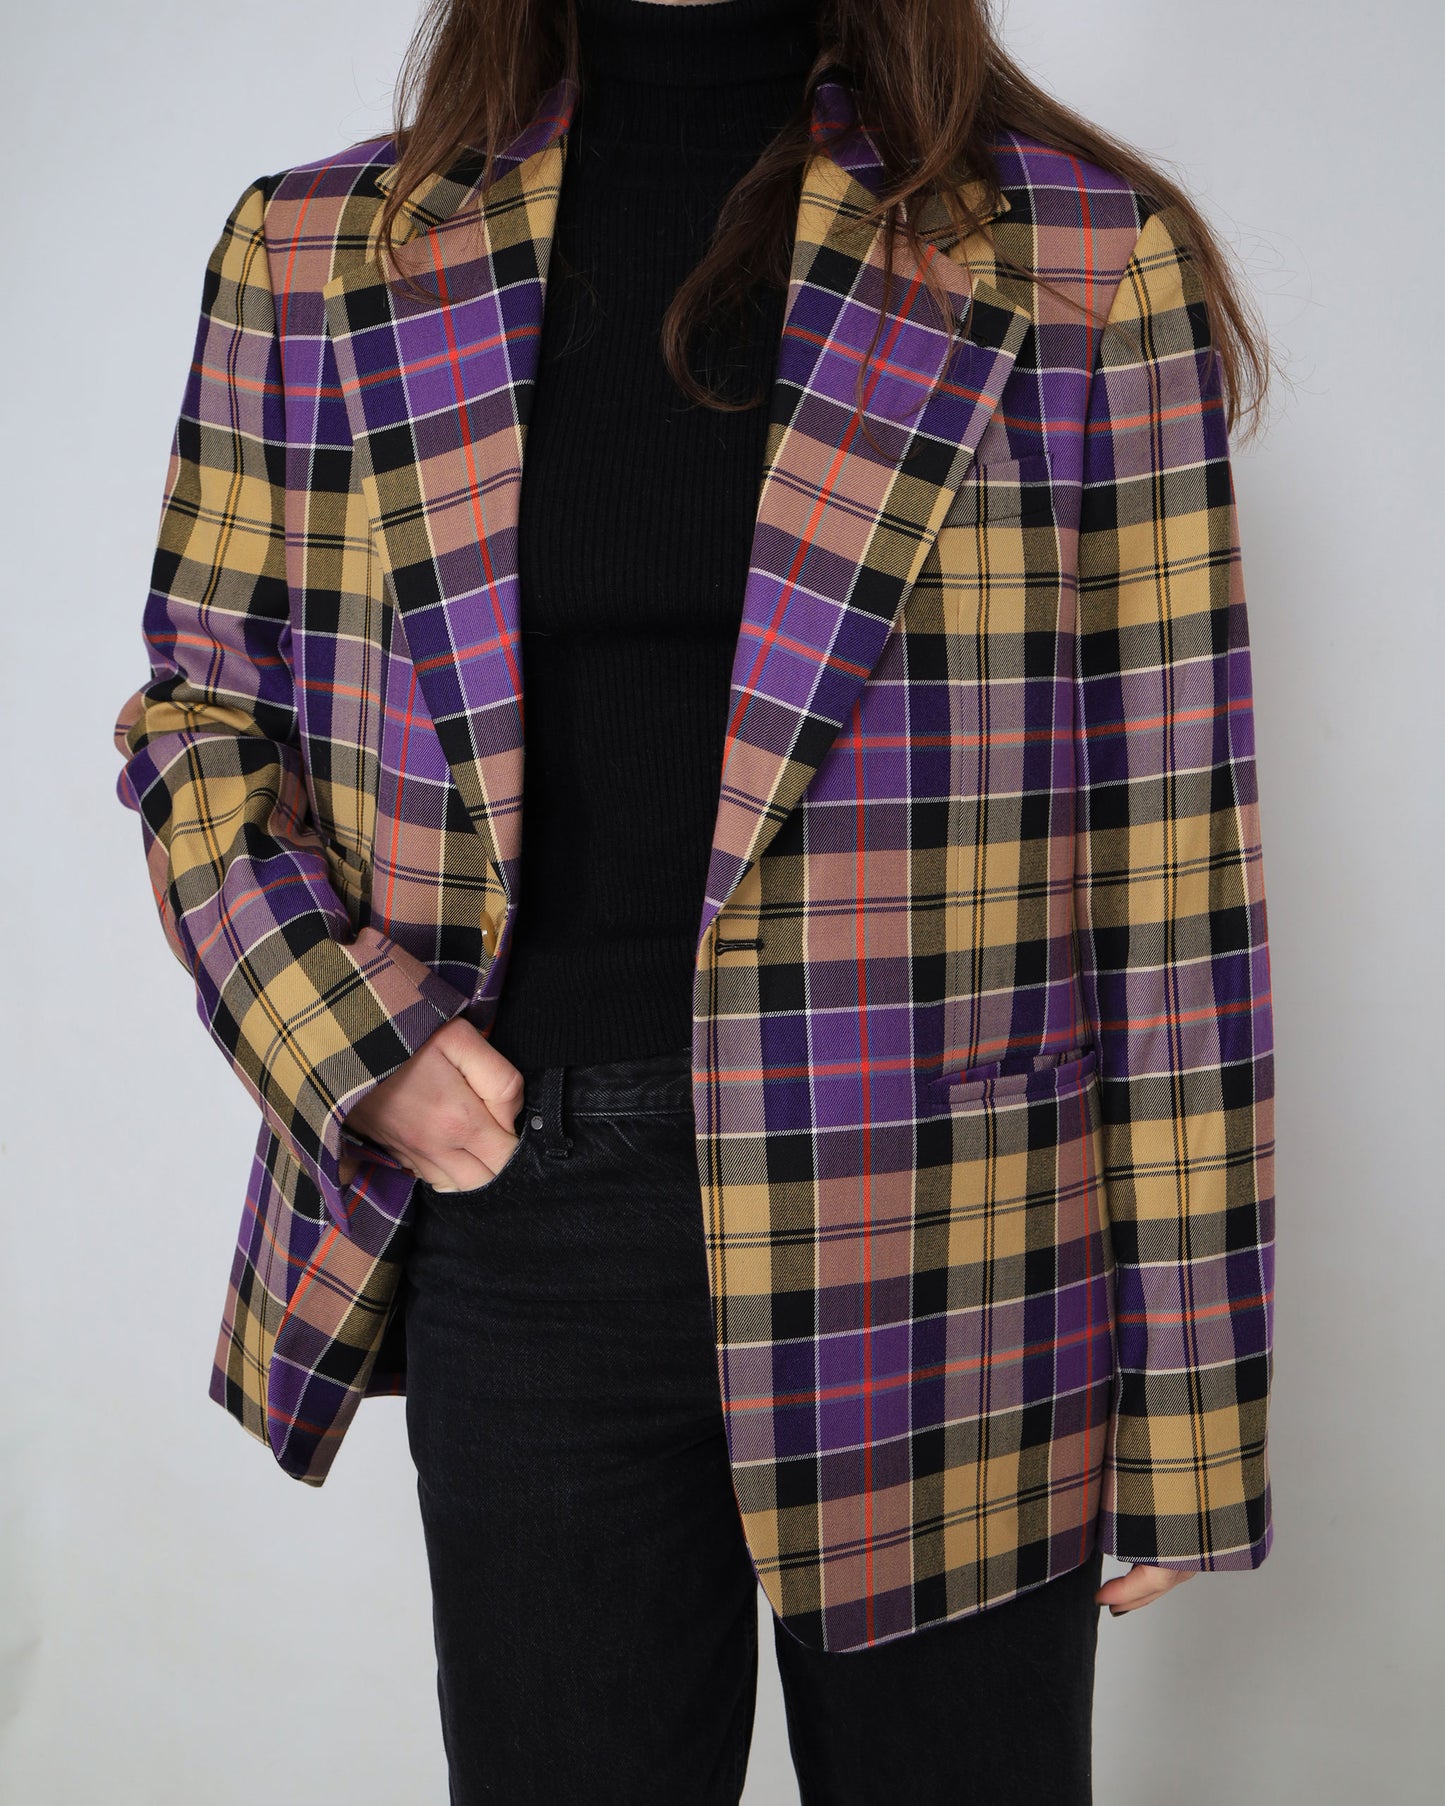 SS21 Vivienne Westwood Tartan Suit Blazer Jacket